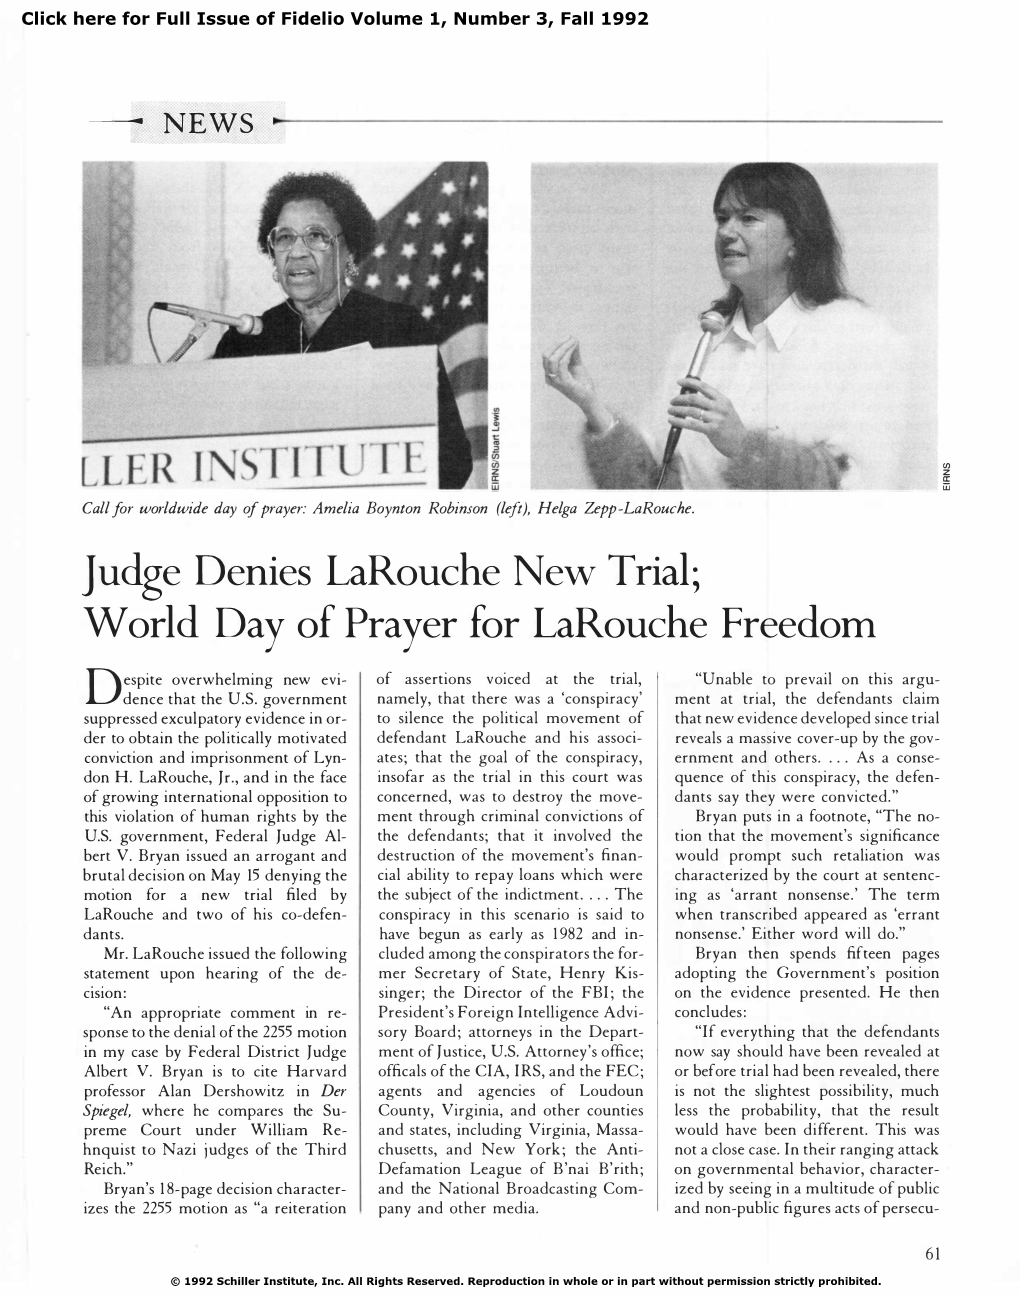 Judge Denies Larouche New Trial; World Day of Prayer Fo R Larouche Freedom